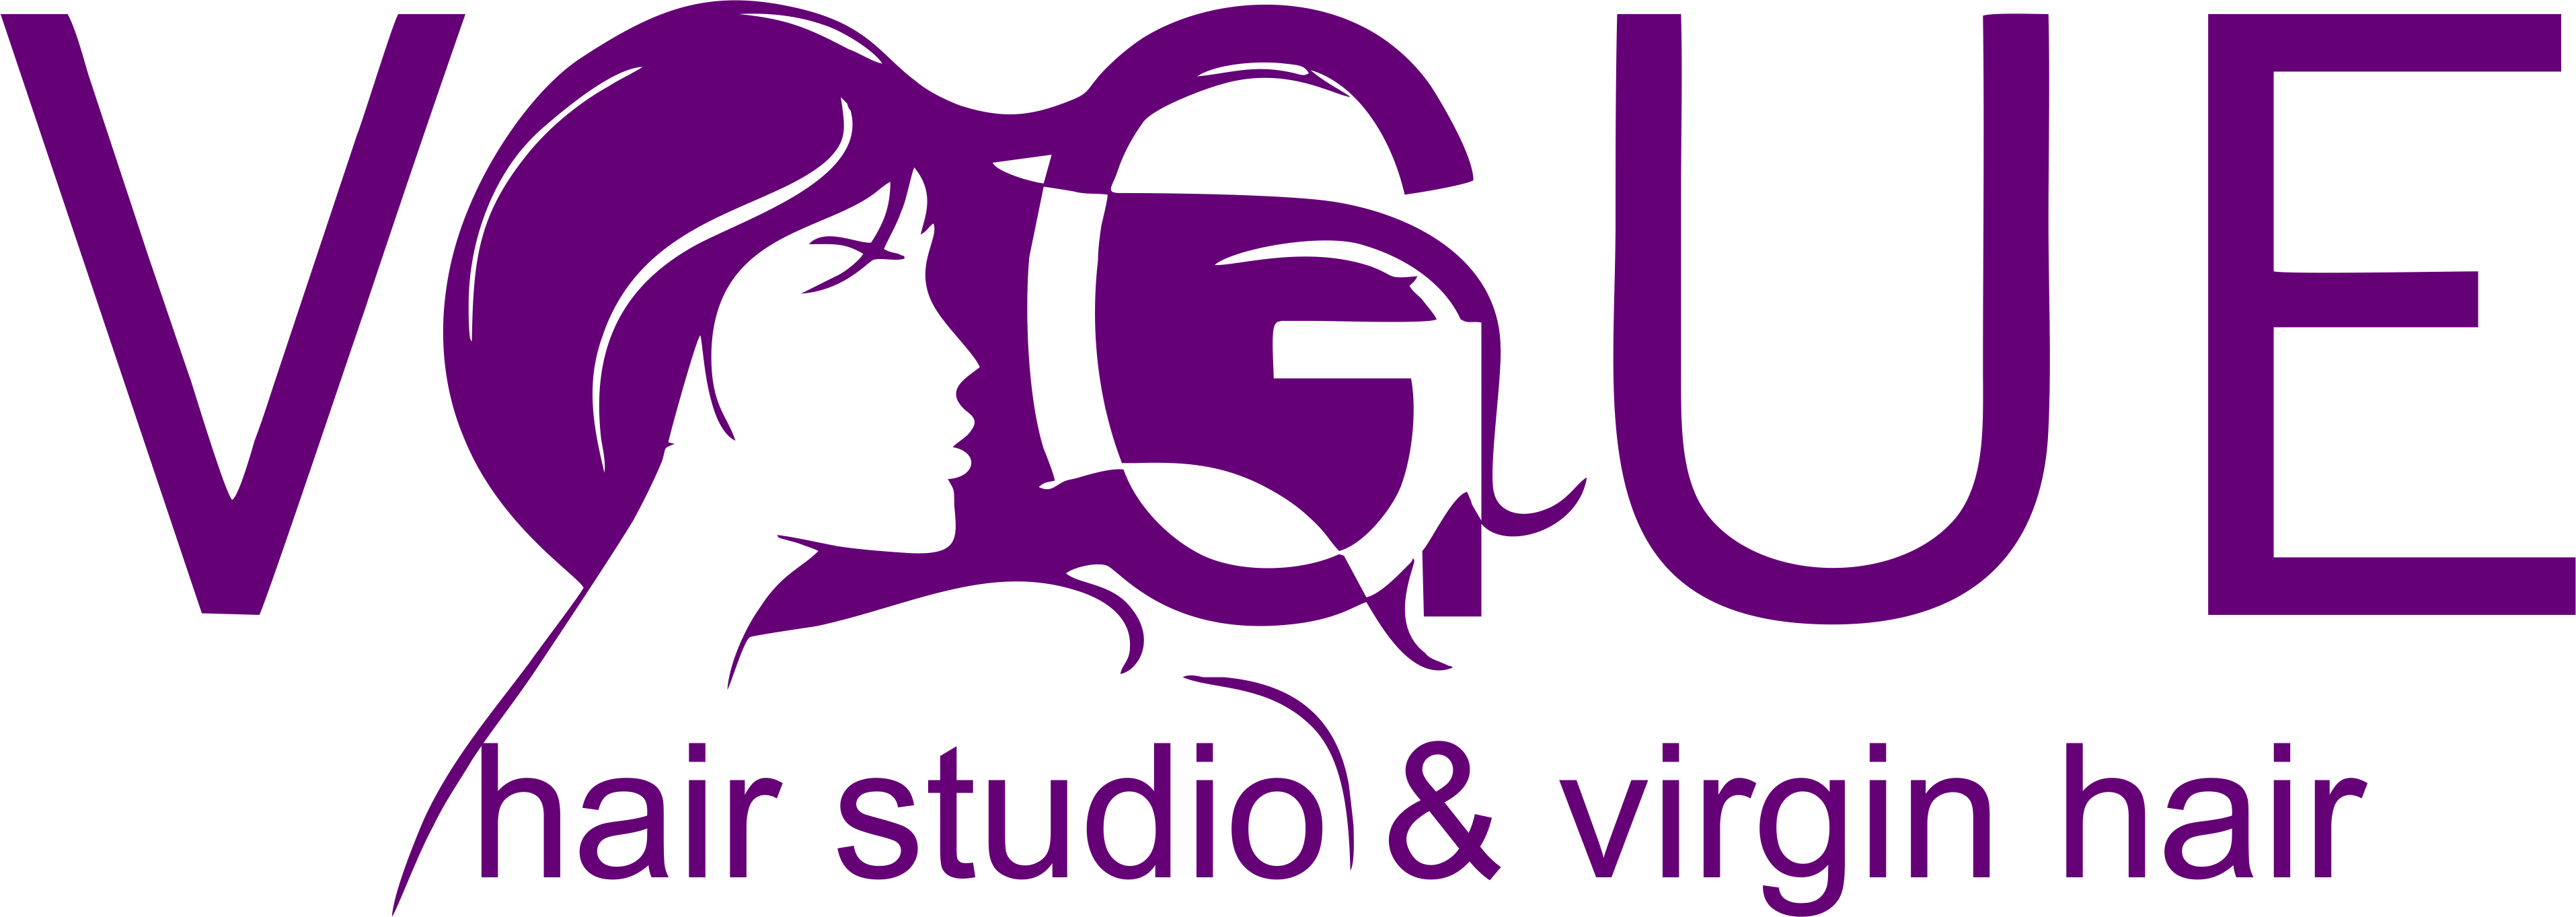 Vogue Hair Studio Logo